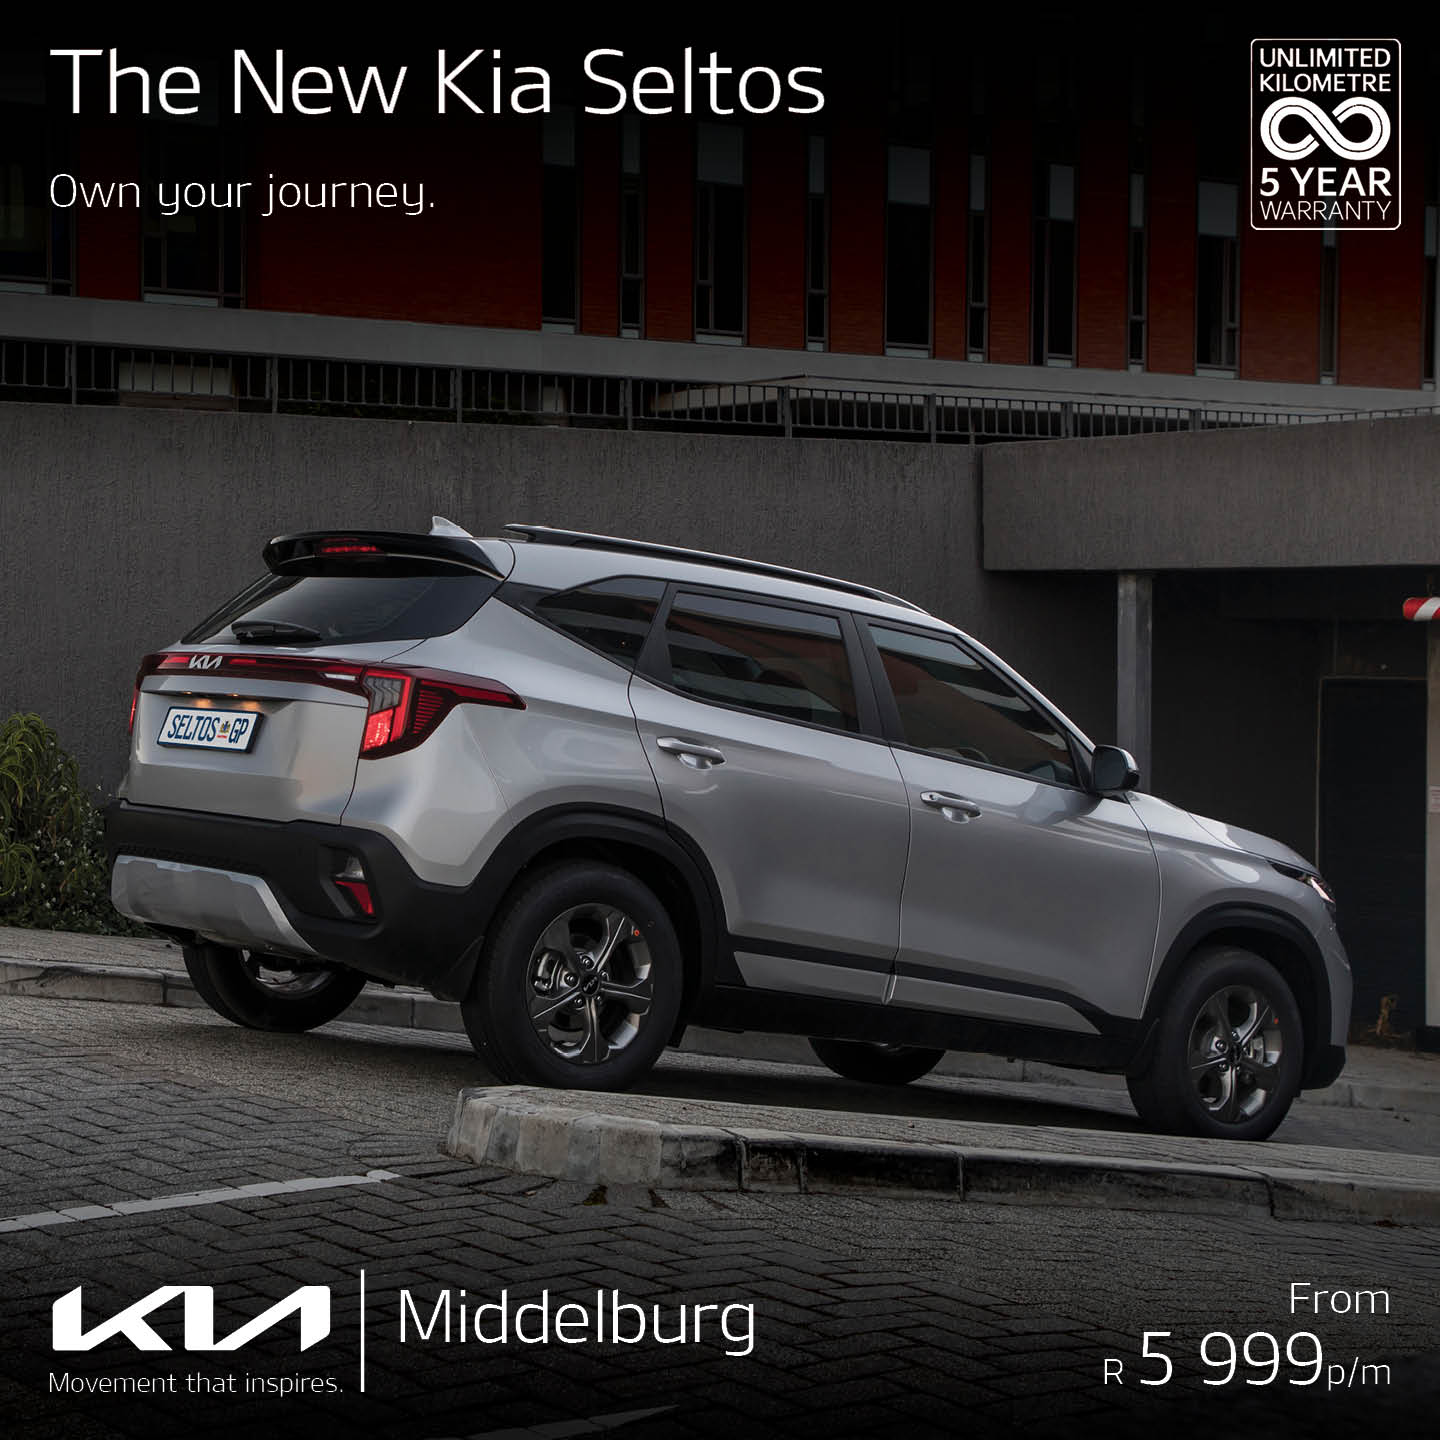 The New KIA Seltos image from 